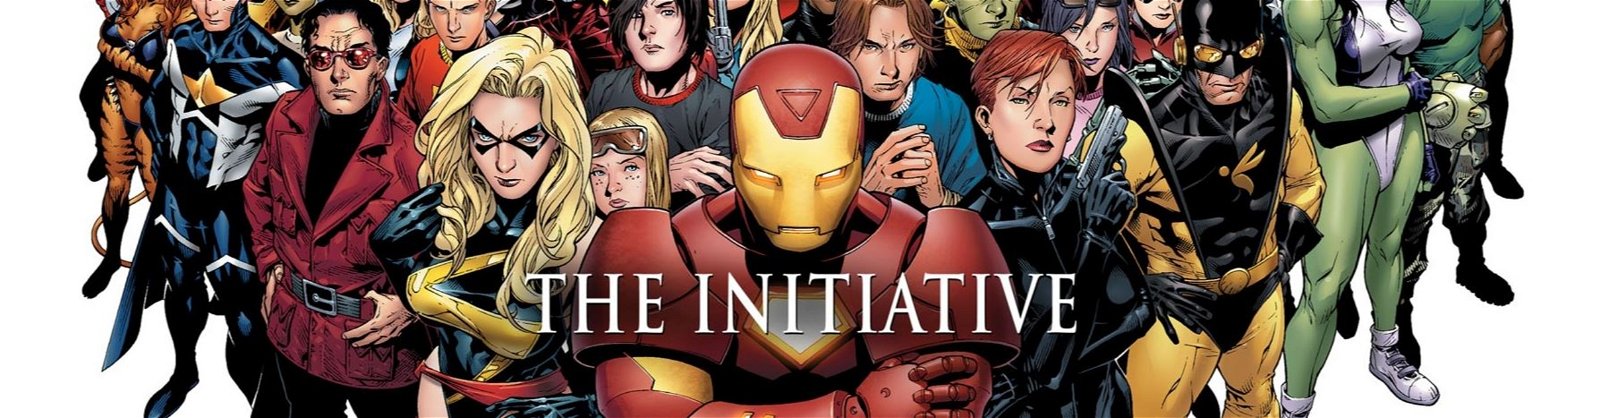 Avengers The Initiative